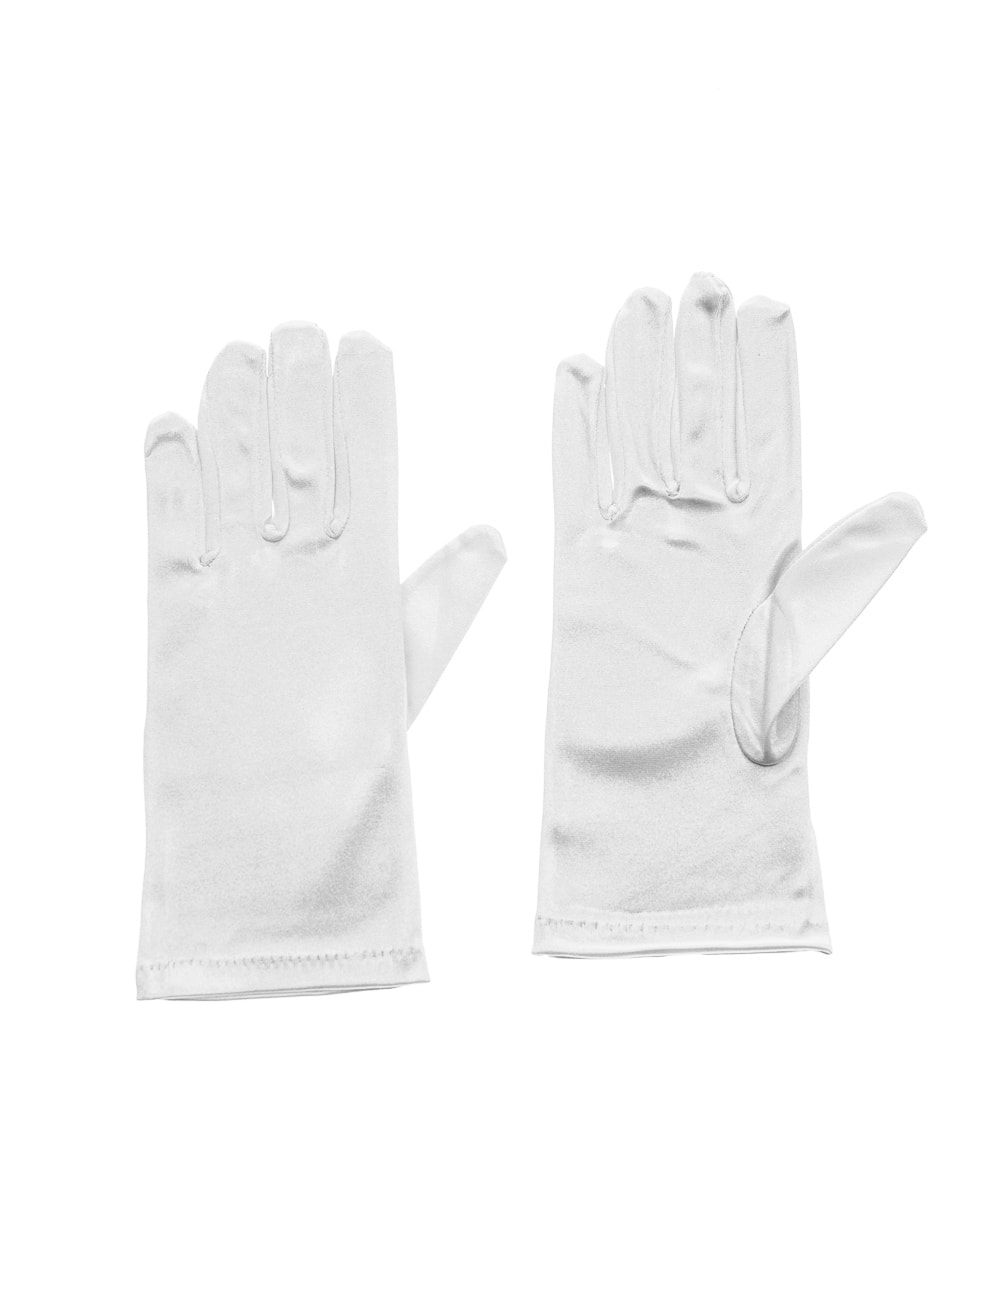 Handschuhe kurz Satin 20cm Damen weiß one size